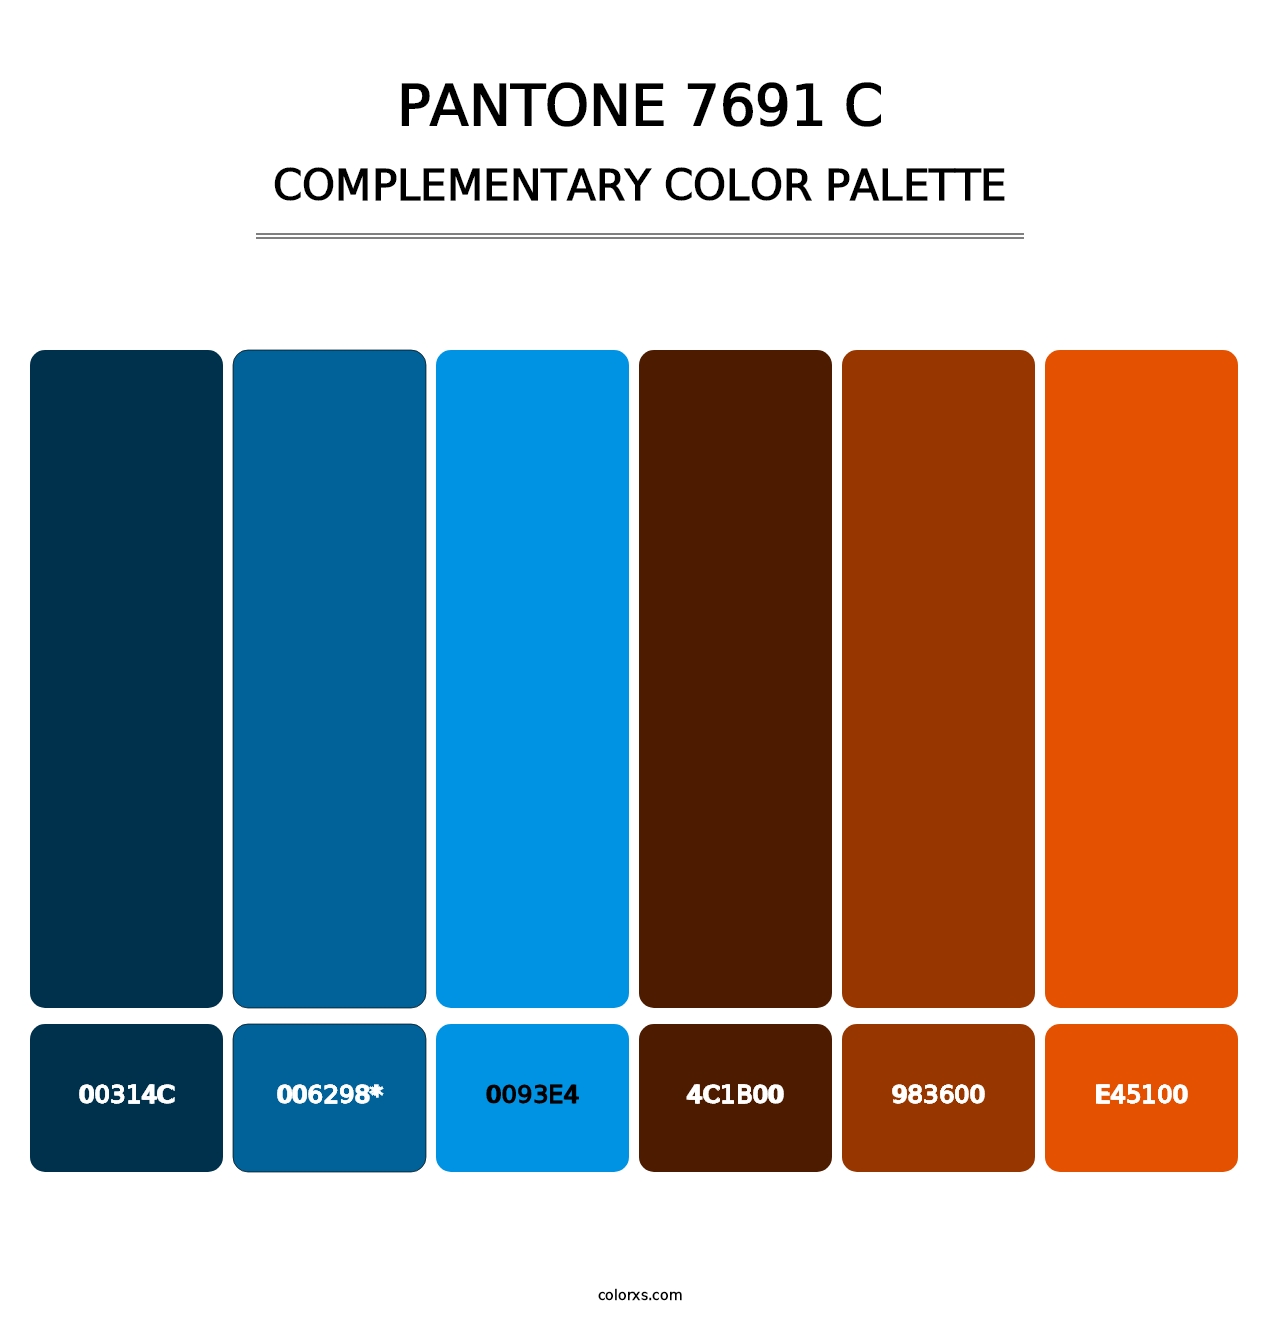 PANTONE 7691 C - Complementary Color Palette